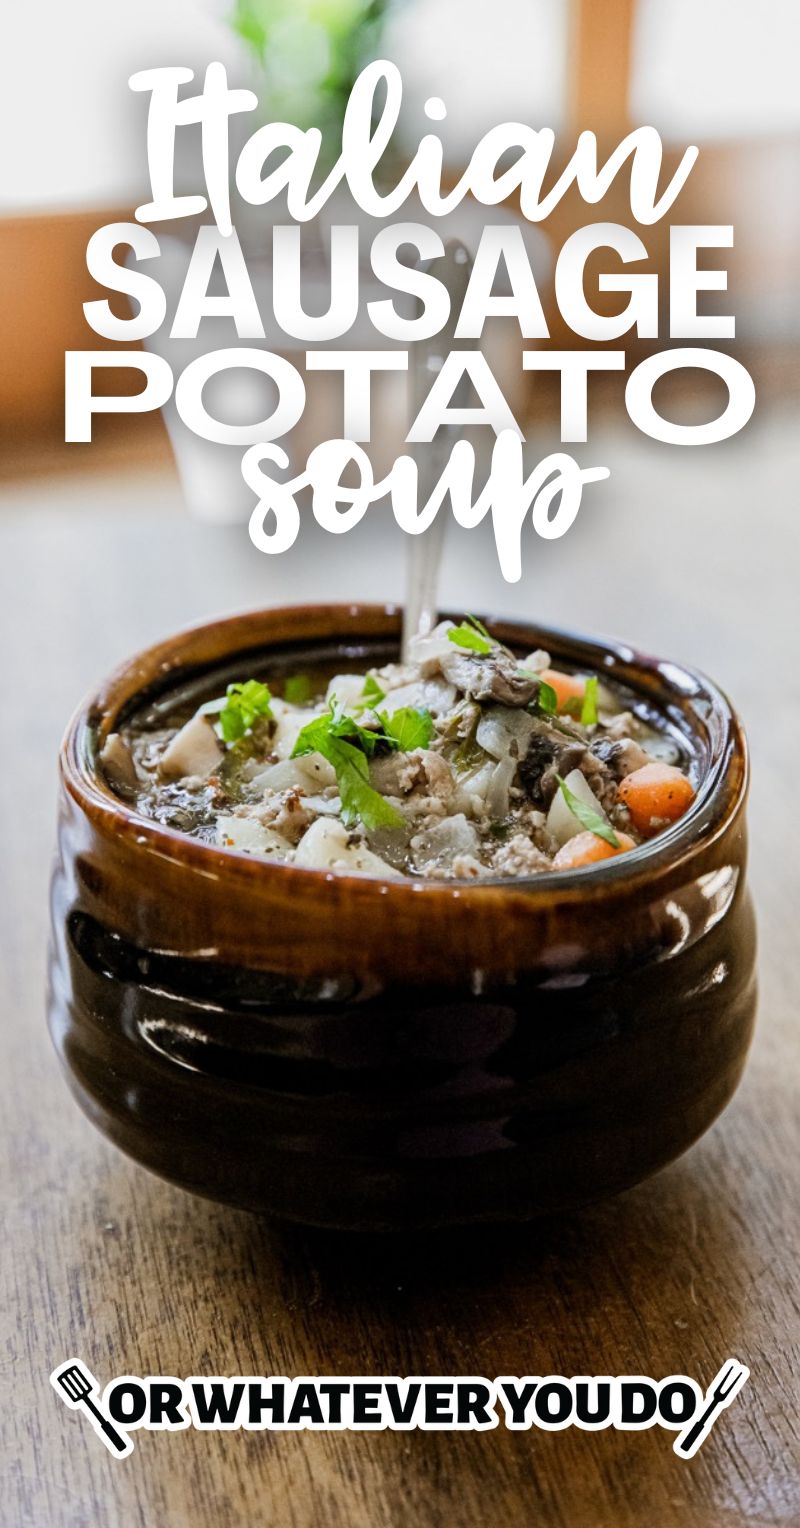 Italian Sausage Potato Soup